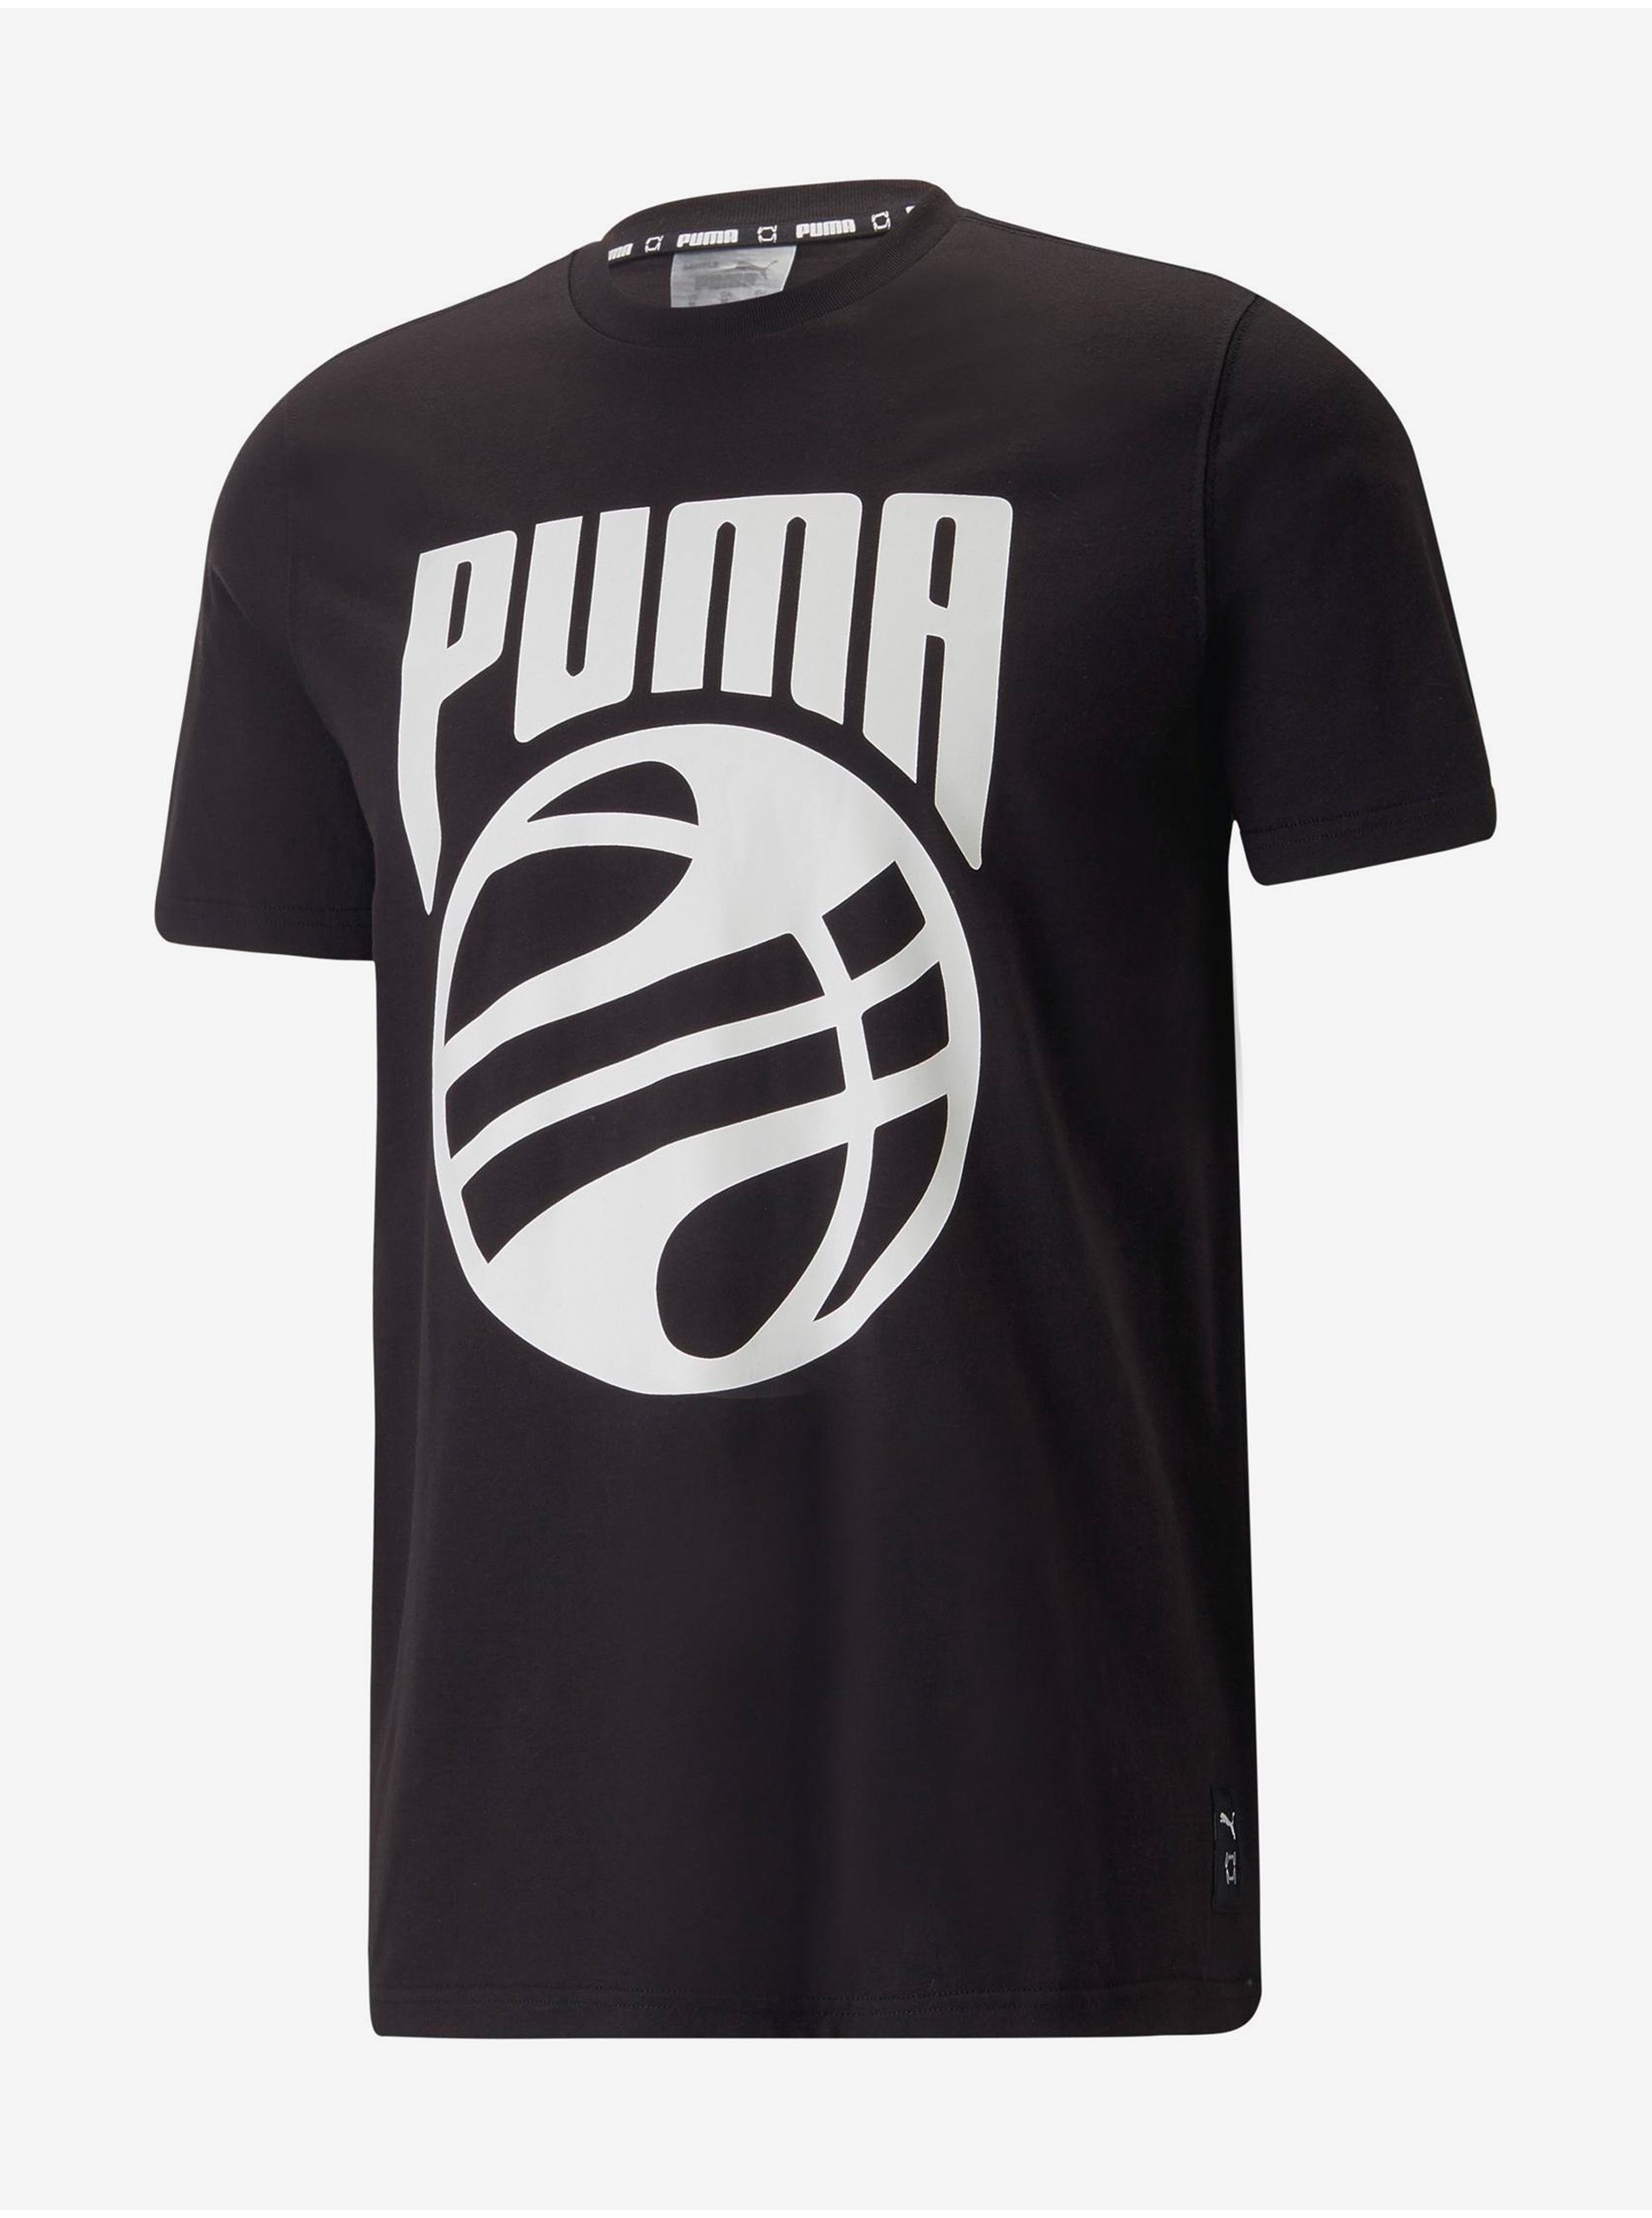 Čierni muži tričko Puma Posterize - Muži